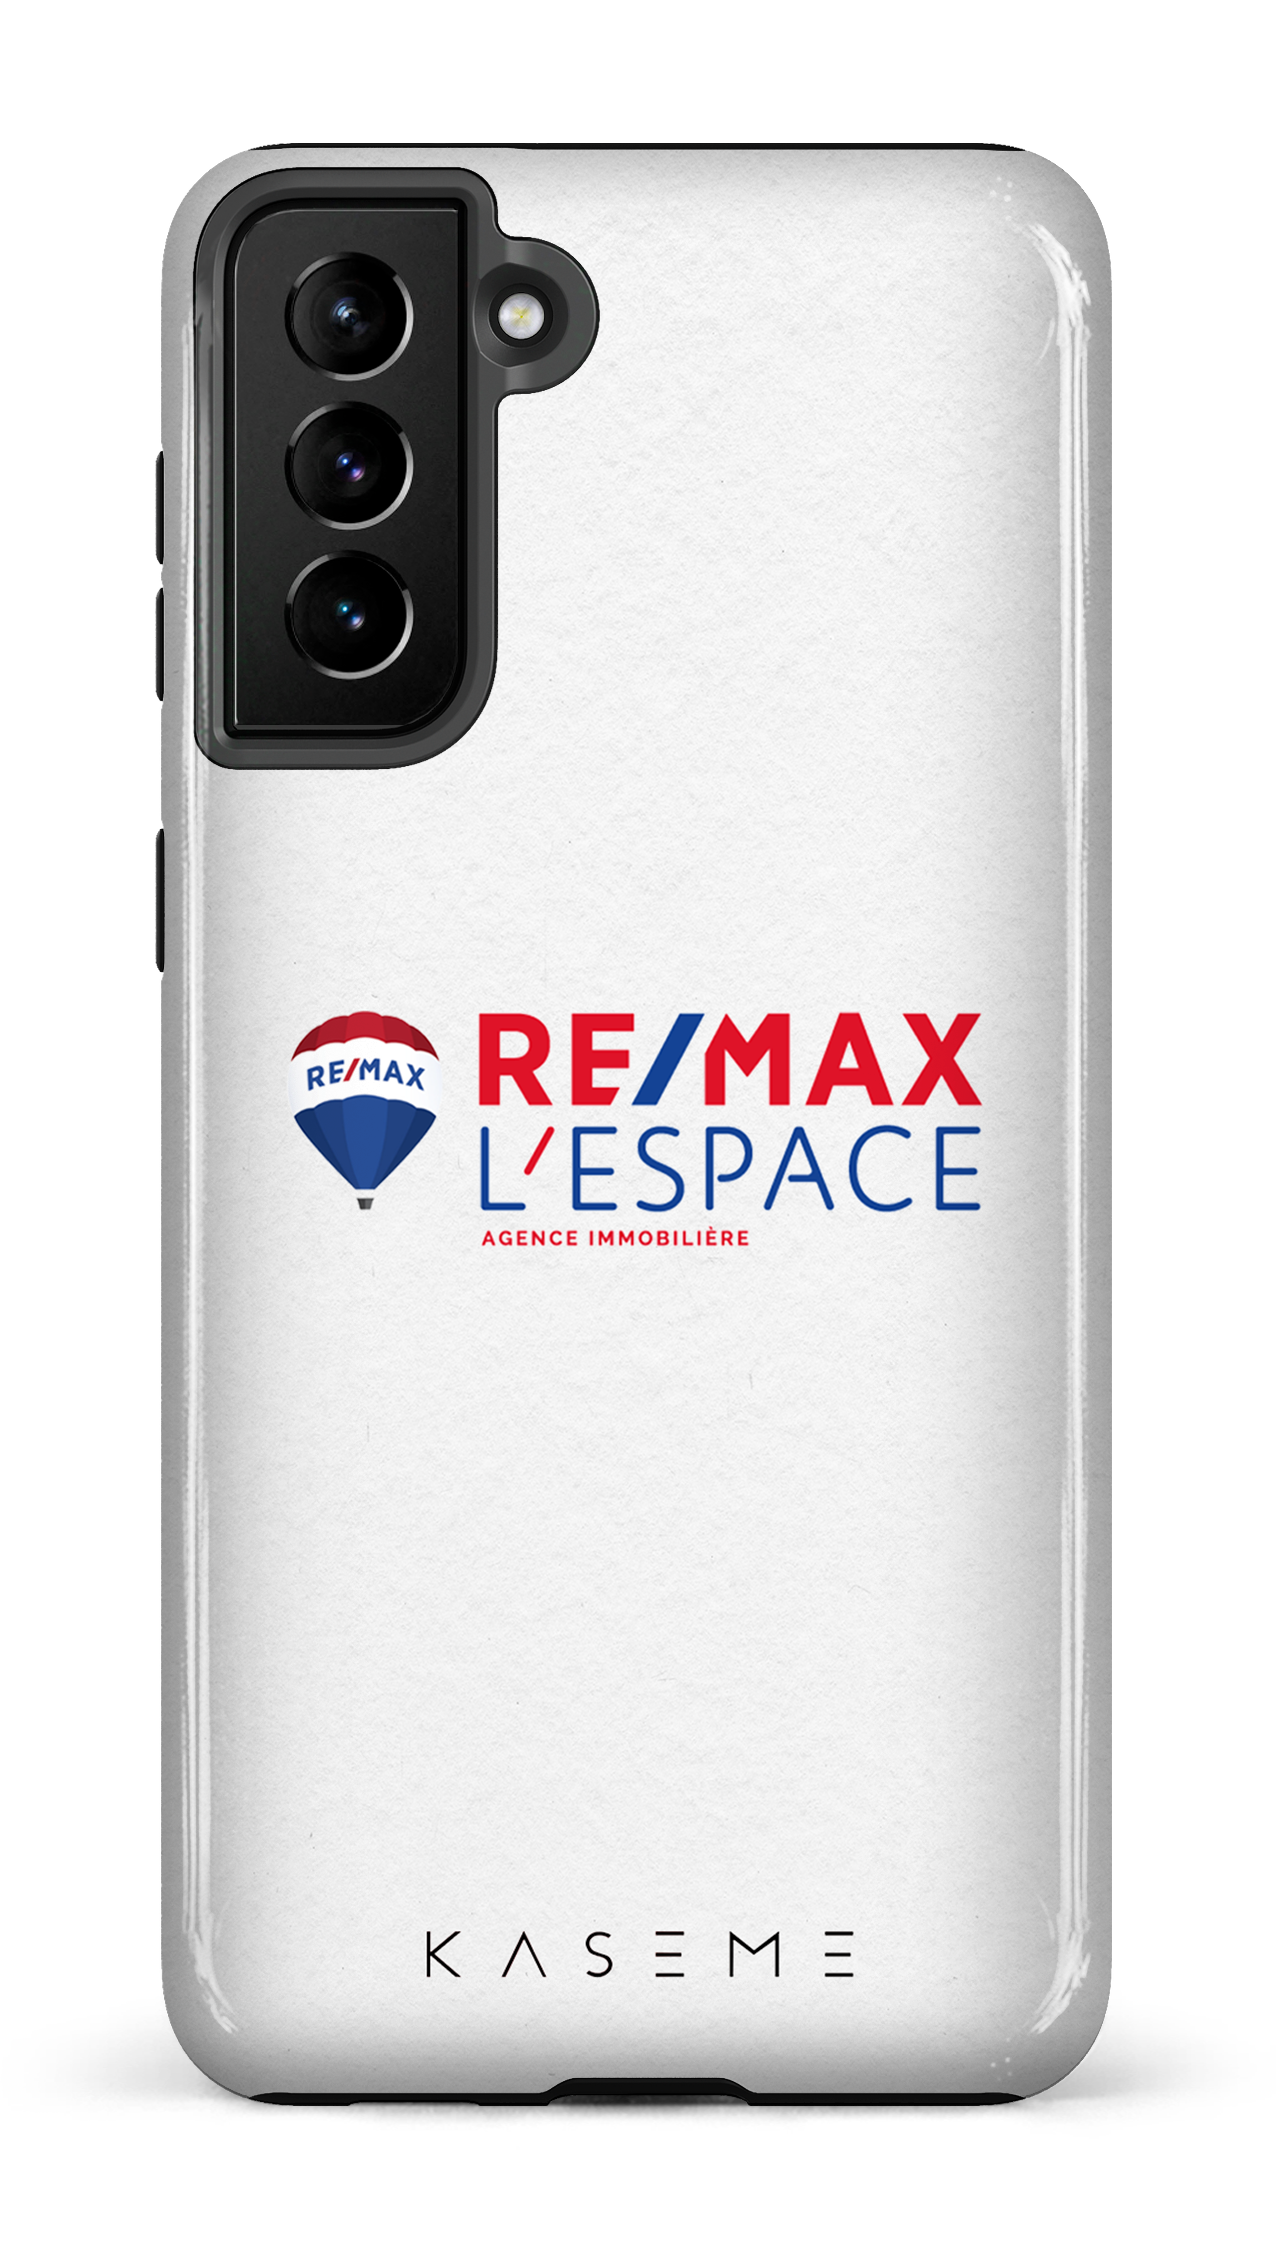 Remax L'Espace Blanc - Galaxy S21 Plus